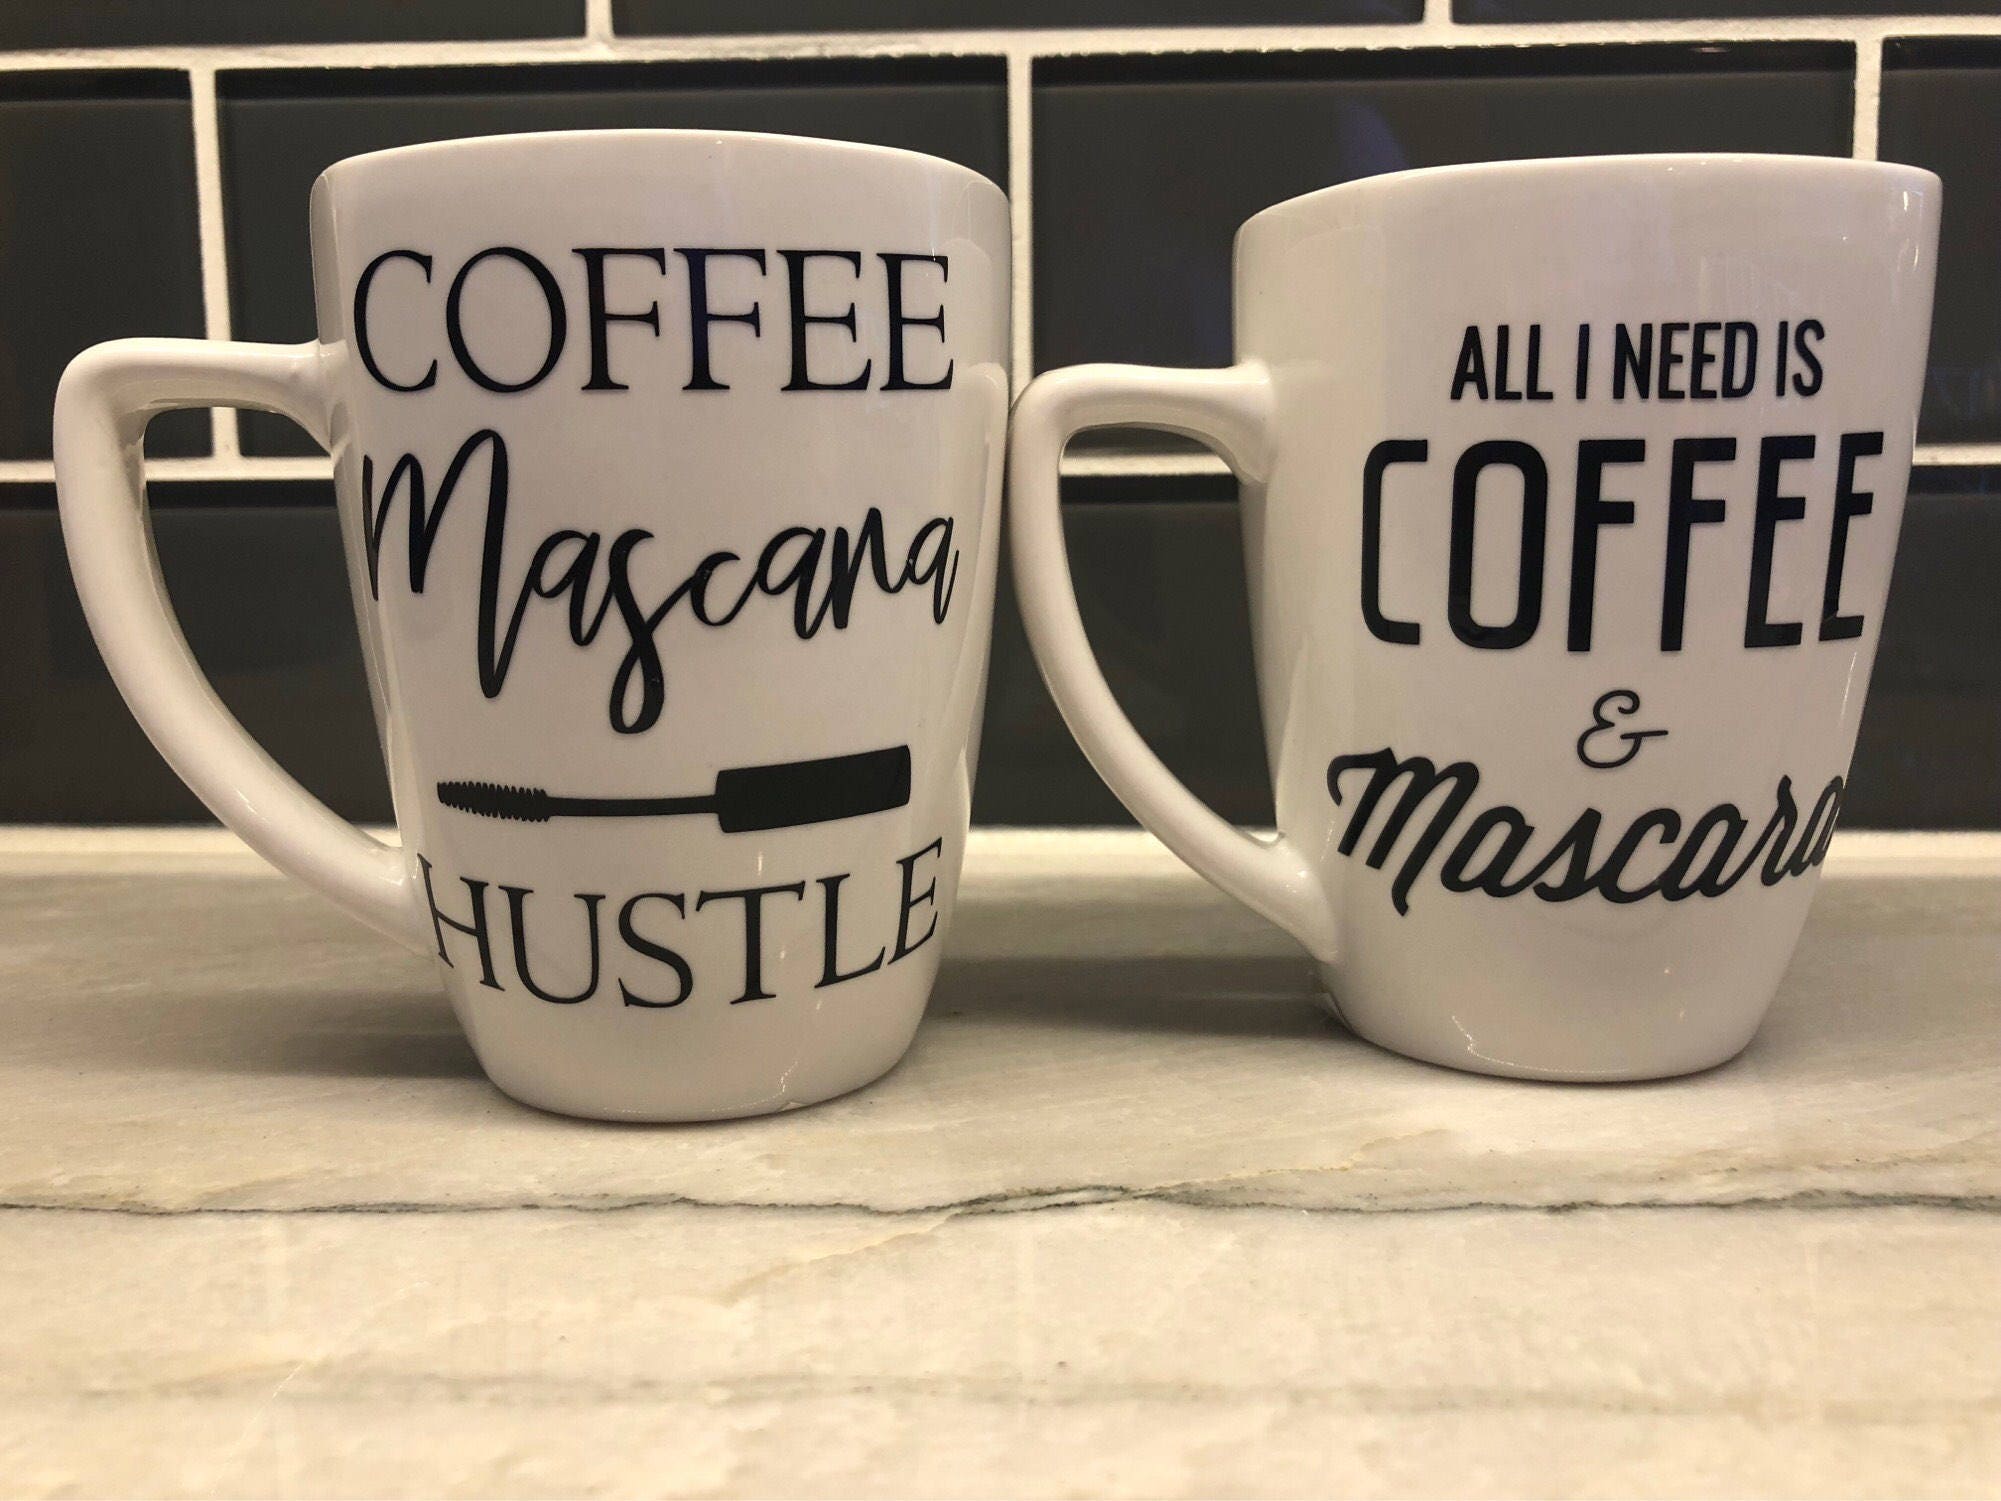 Download All i need is coffee and mascara mug / coffee mascara hustle